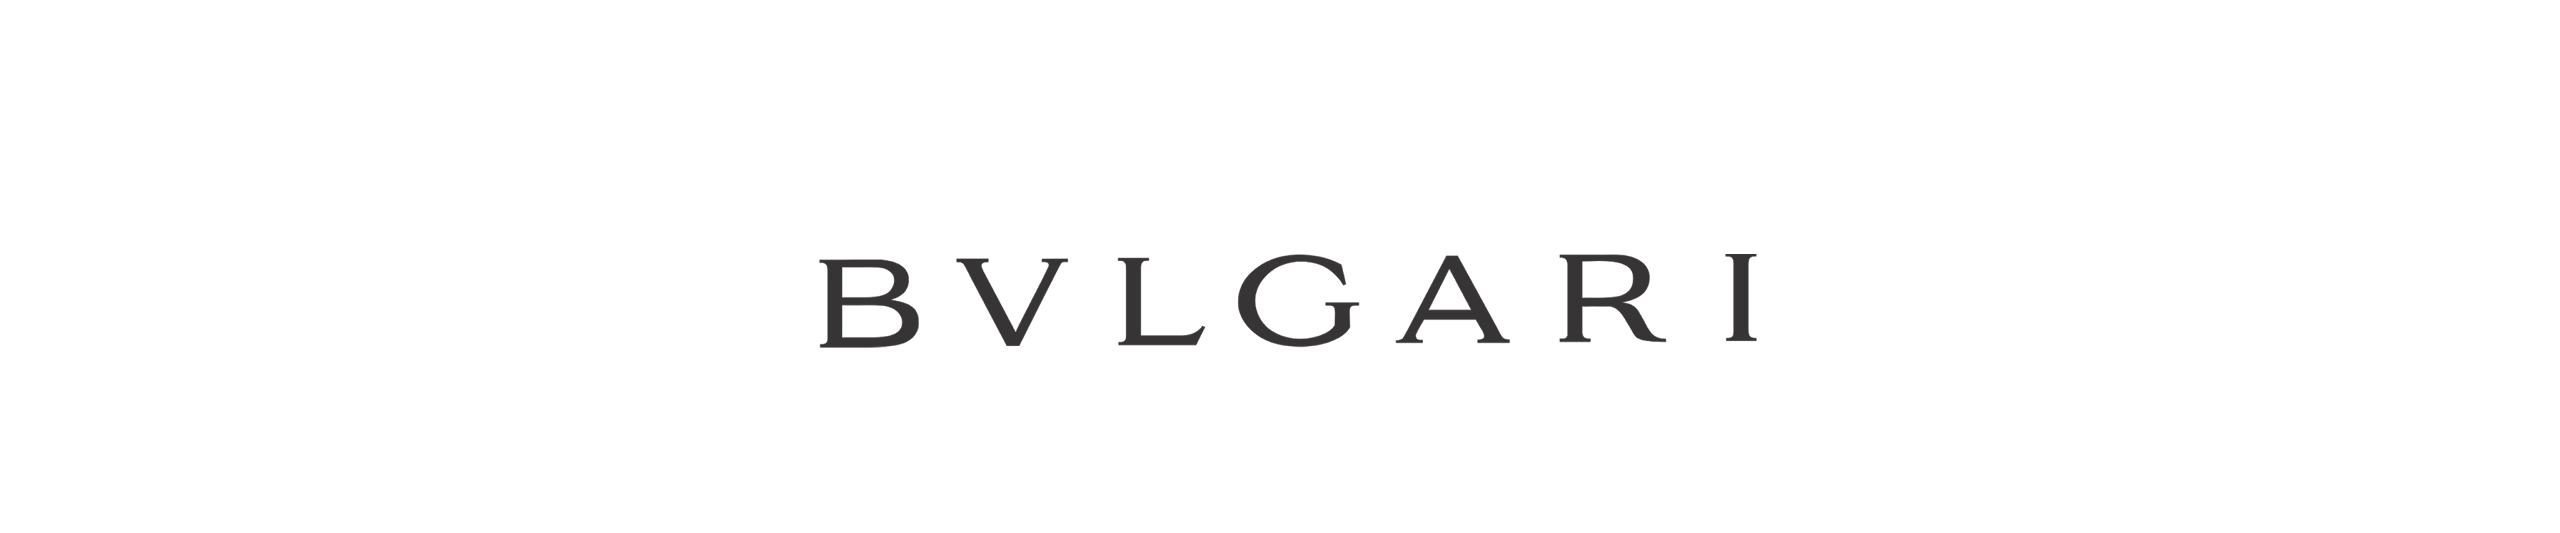 Bvlgari Gold Logo - Bvlgari Glasses Online | Shop Luxury Collections